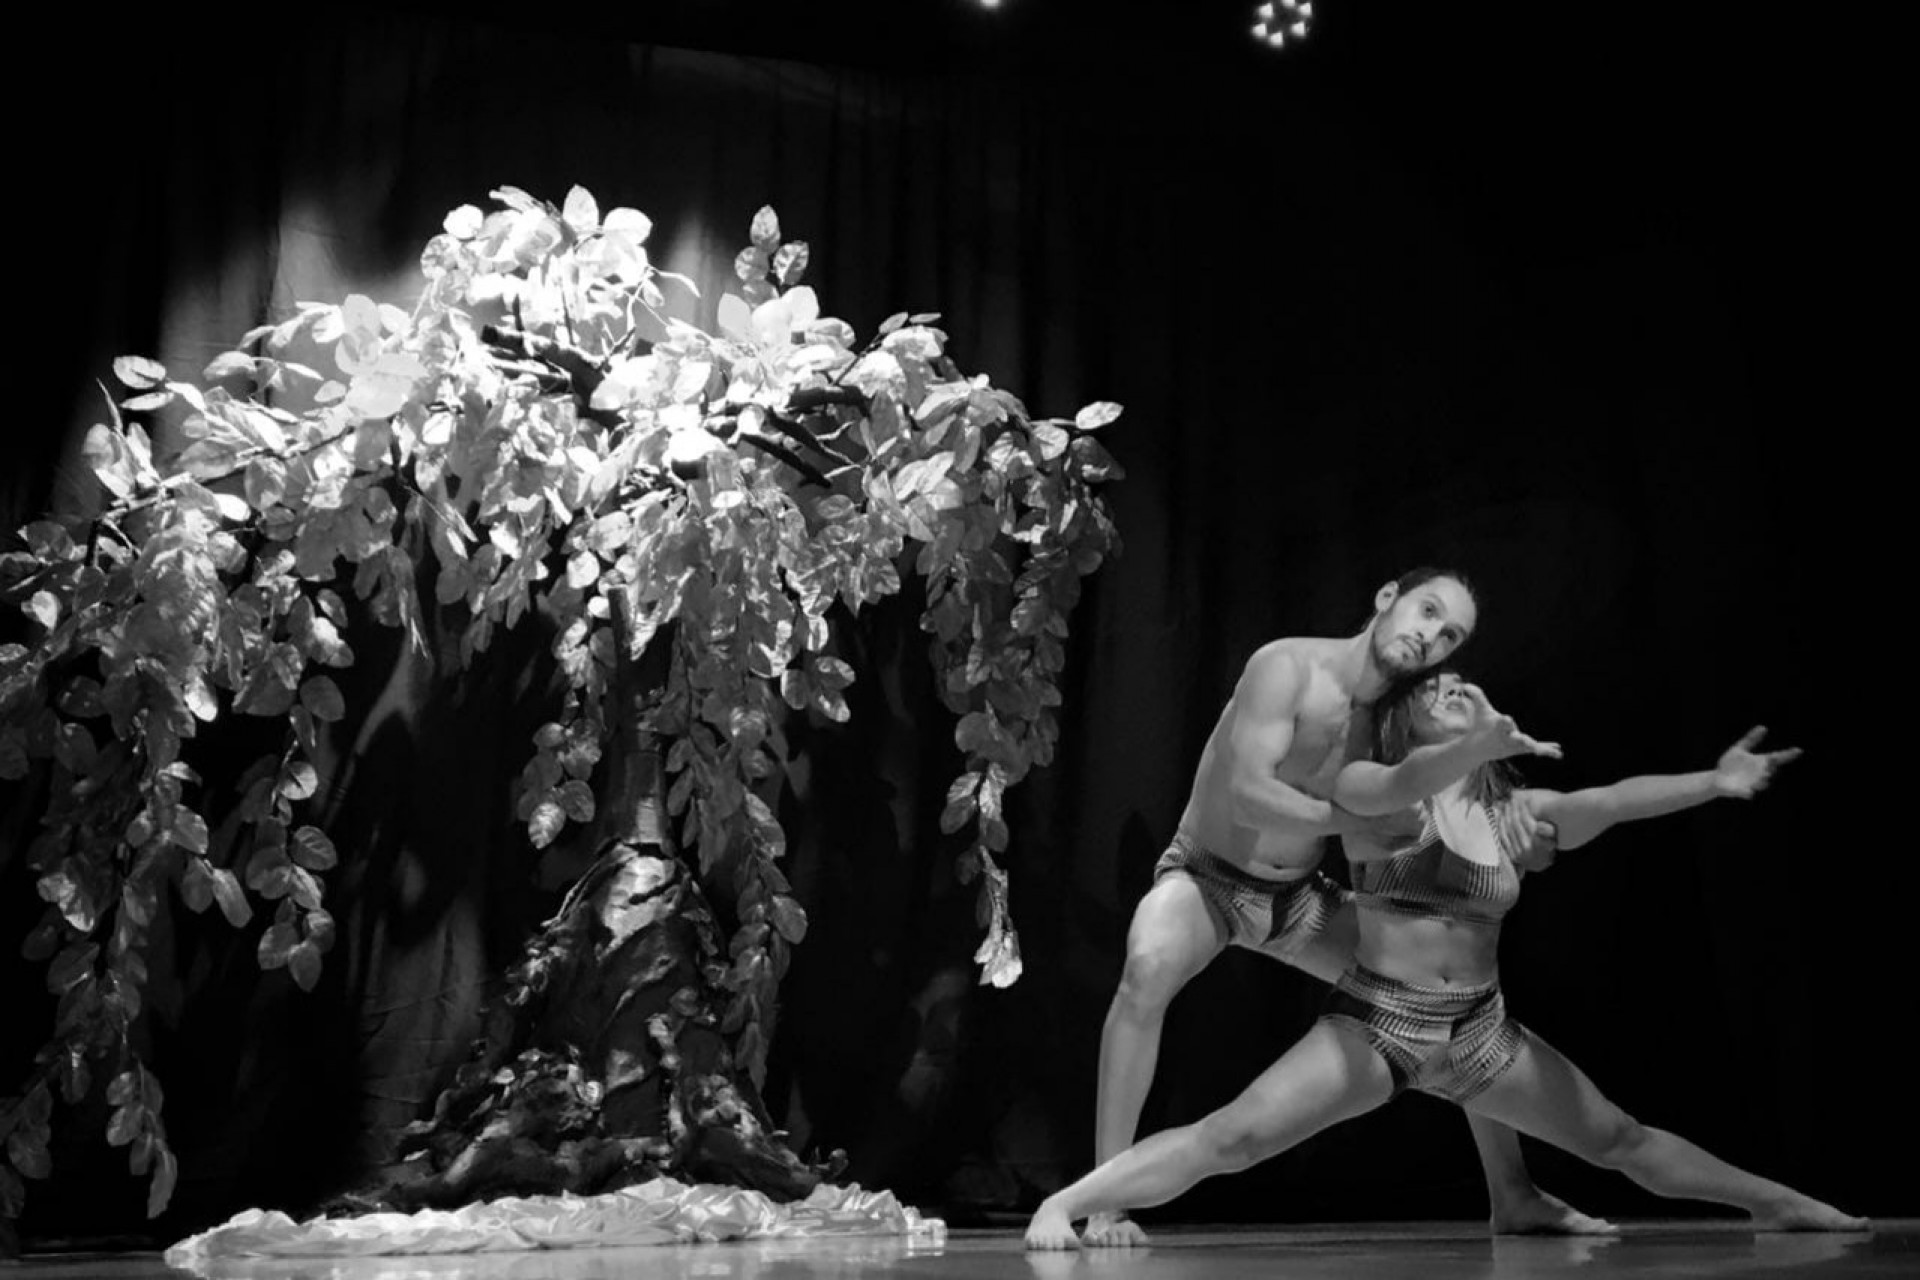 Missal receberá espetáculo de Dança Way integrante ao projeto Correnteza Cultural